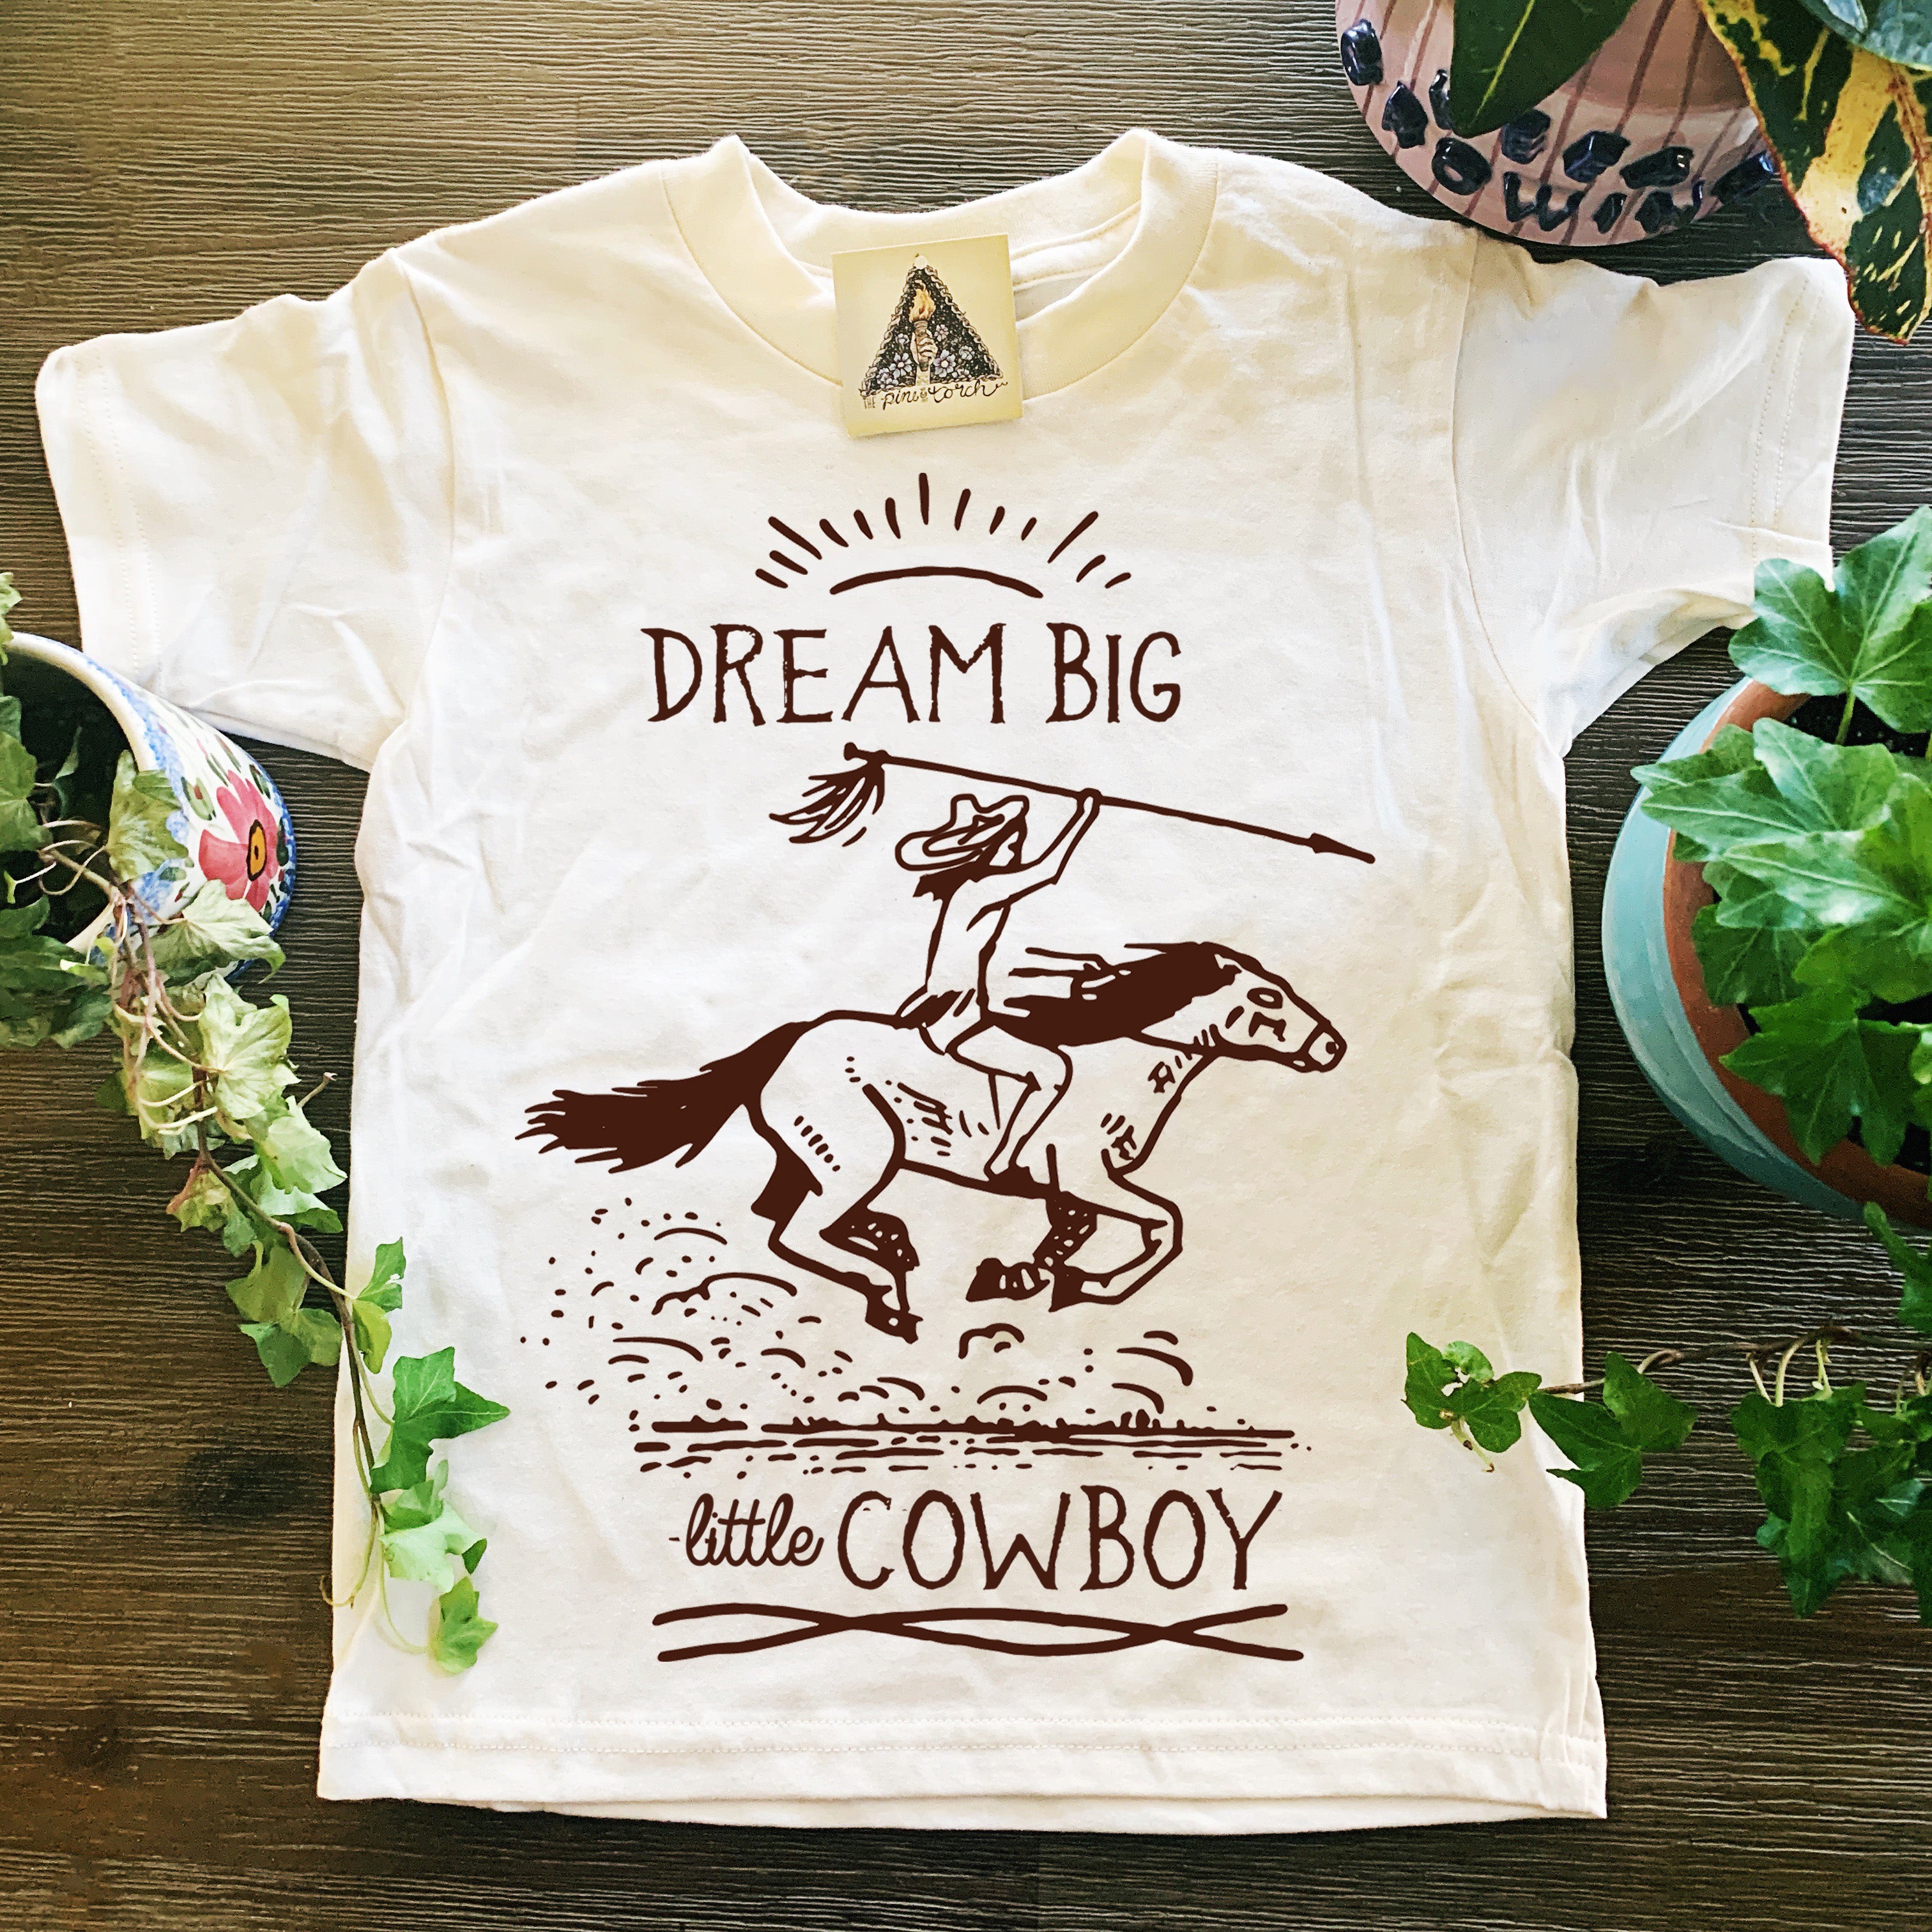 « DREAM BIG, LITTLE COWBOY » KID'S TEE